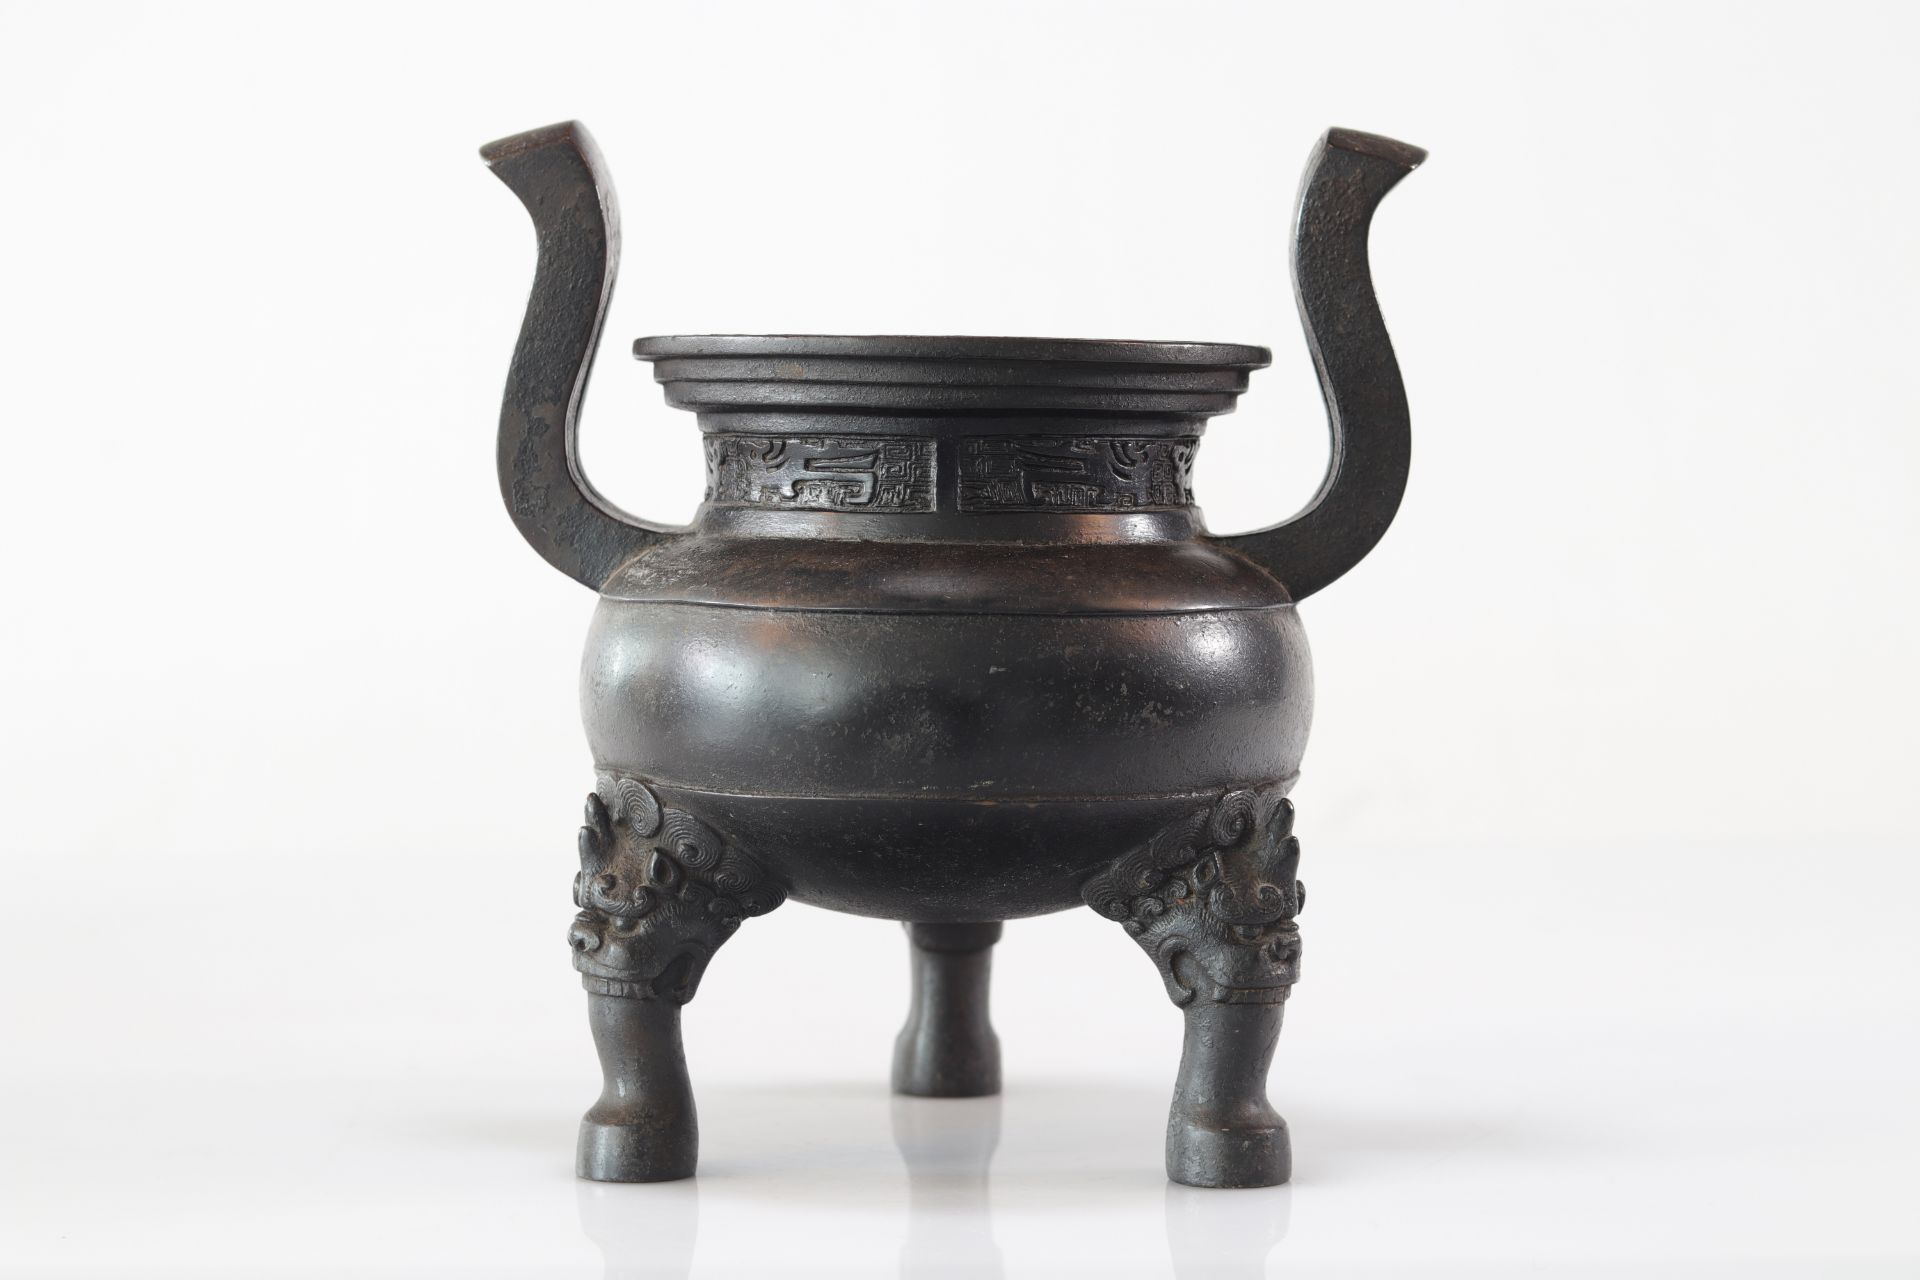 Ming perfume burner 16/17th century - Ming period